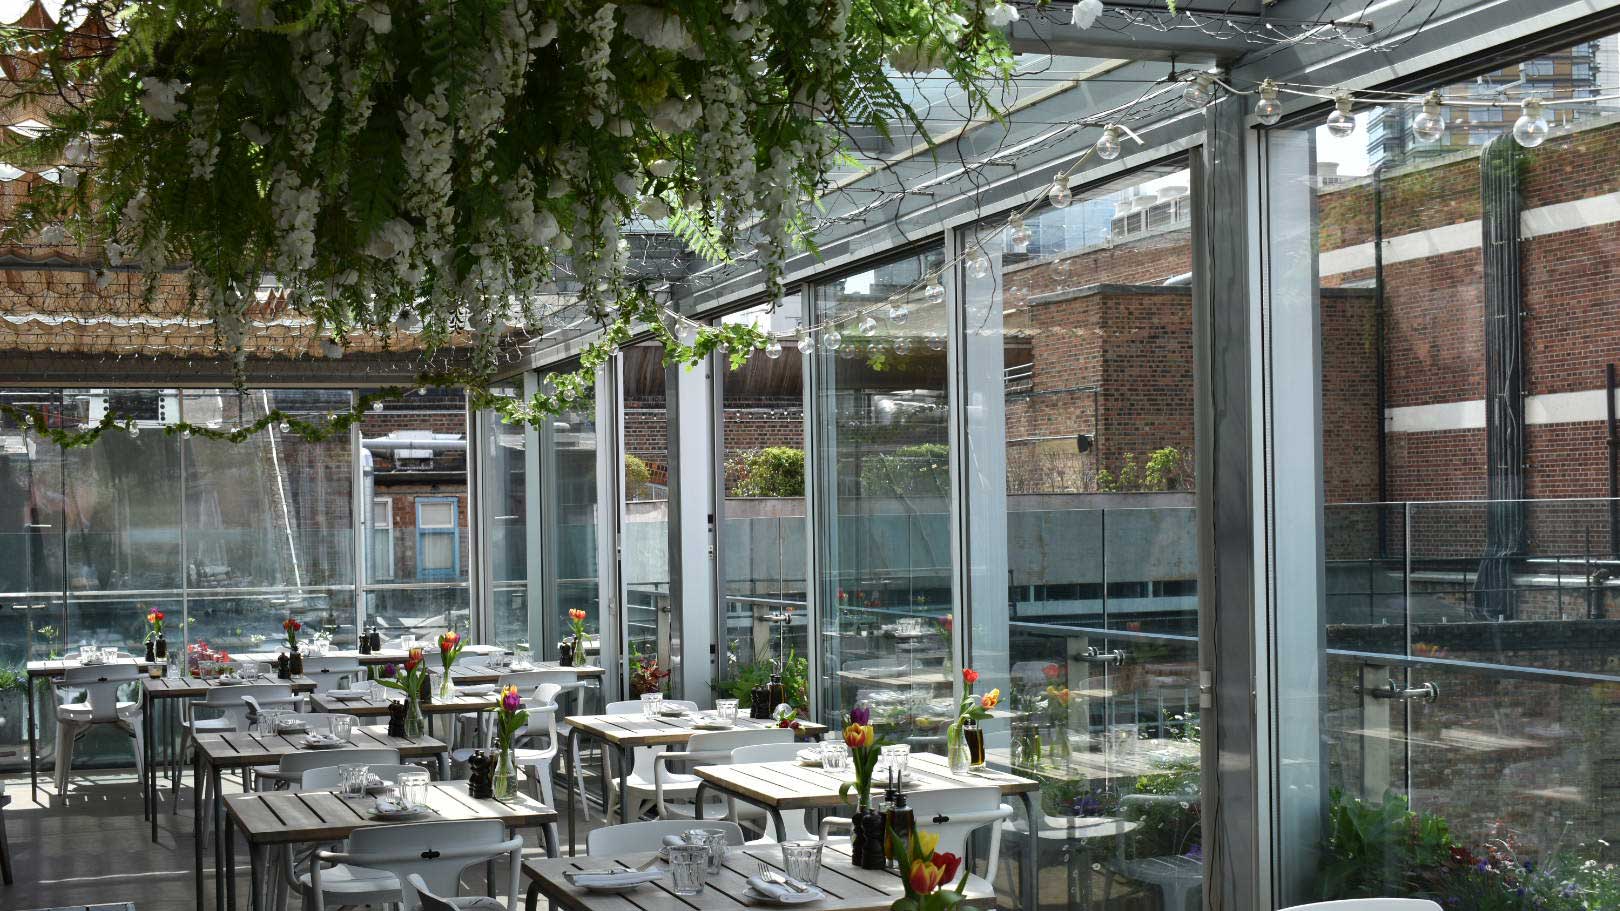 15 London Restaurants With Great Views Cnn Travel